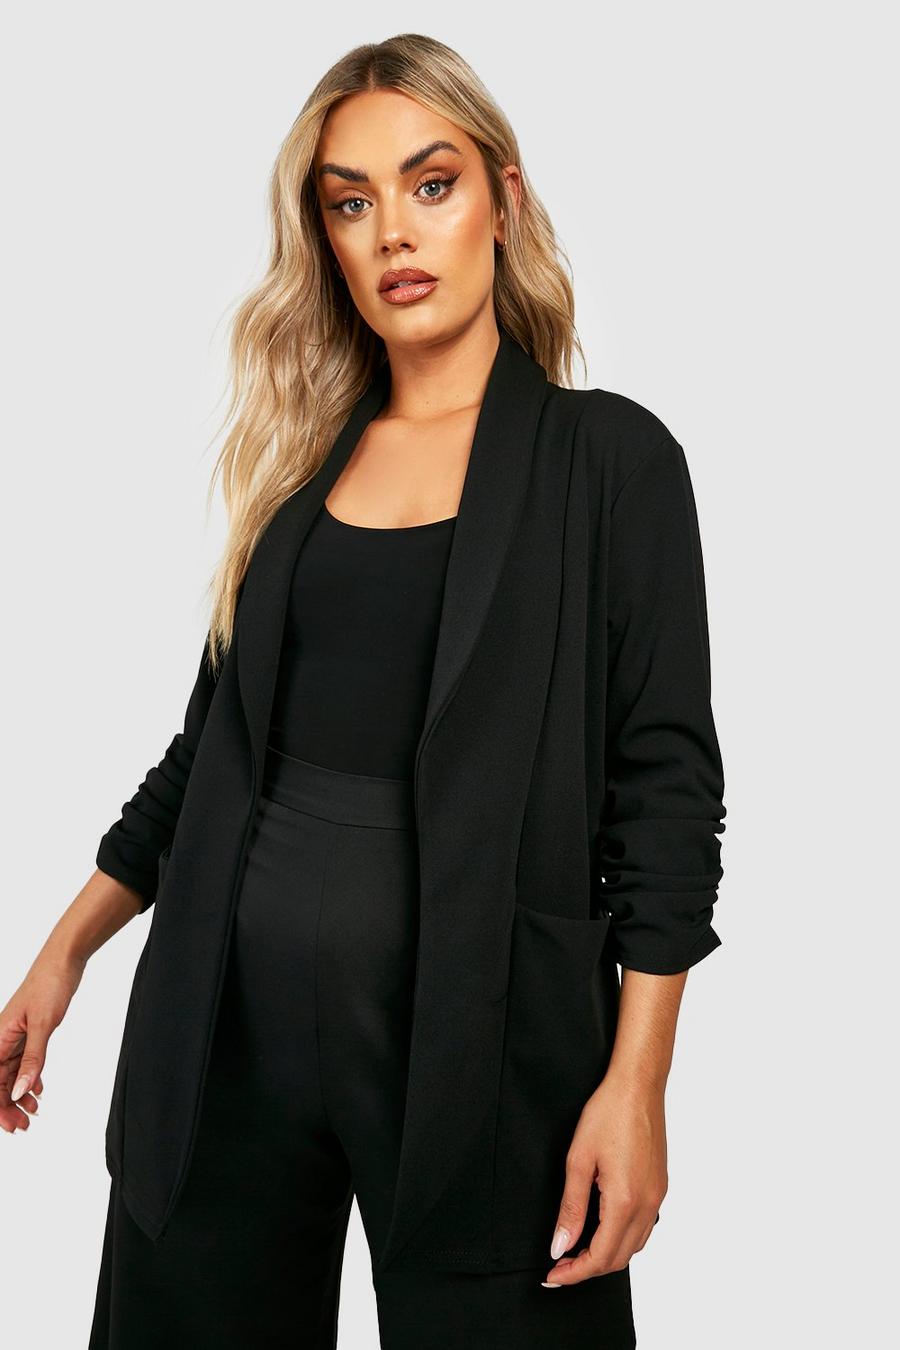 Saiz S-5XL Blazer Hitam New Women Long Sleeve Suit Office Top Long Jacket  Blazer Coat Plus Size Slimming Kurus